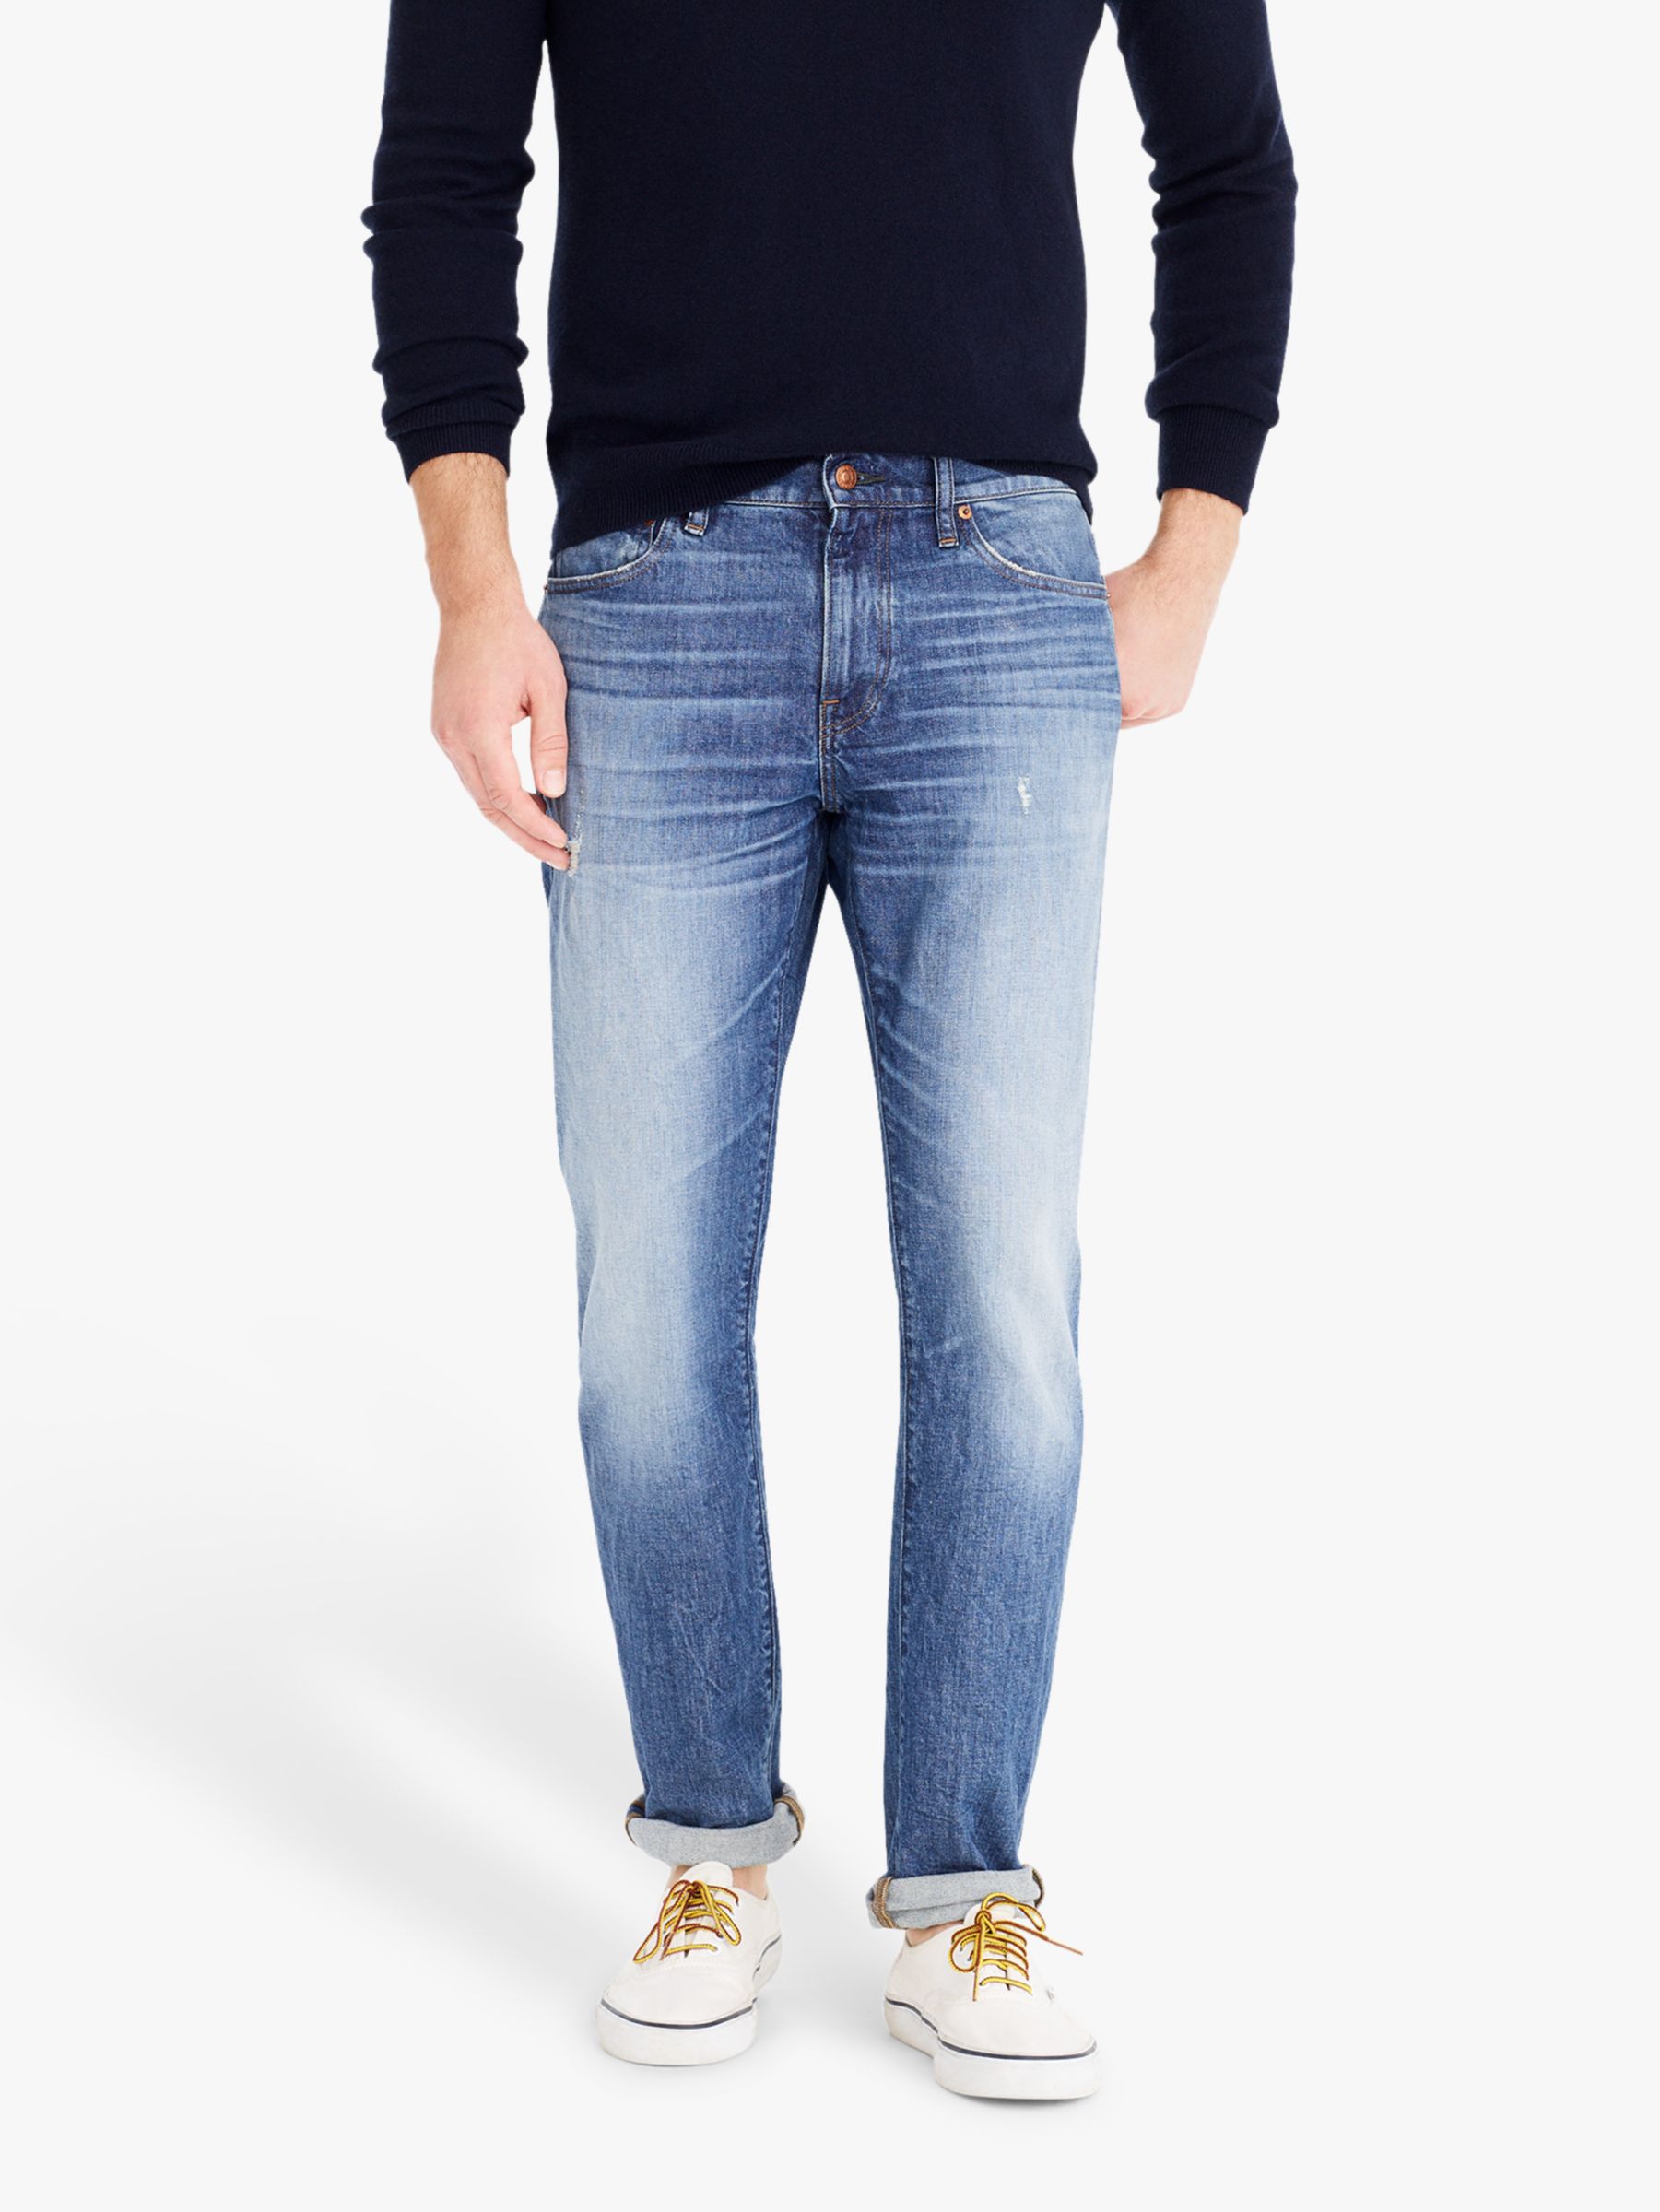 J.Crew 484 Slim Fit Jeans, Medium Indigo at John Lewis & Partners